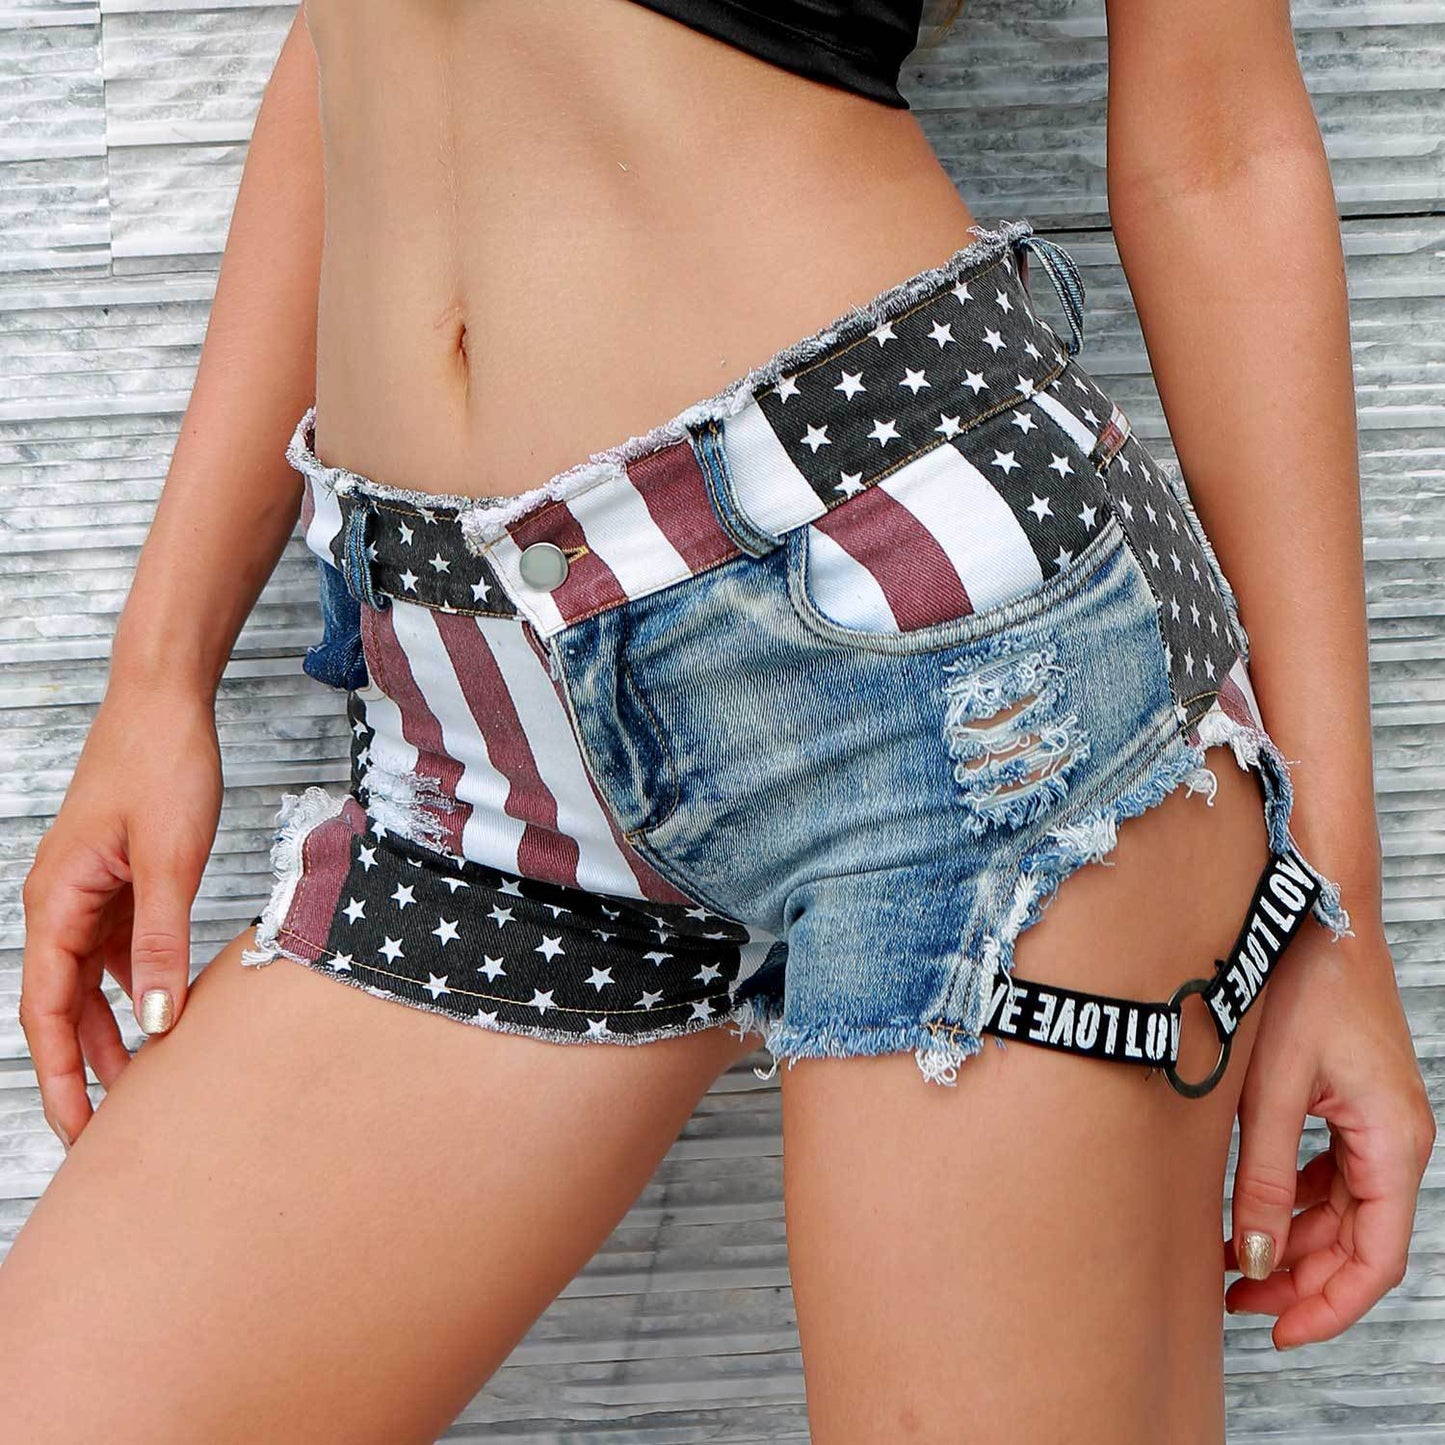 Distressed US Flag Denim Shorts apparel & accessories